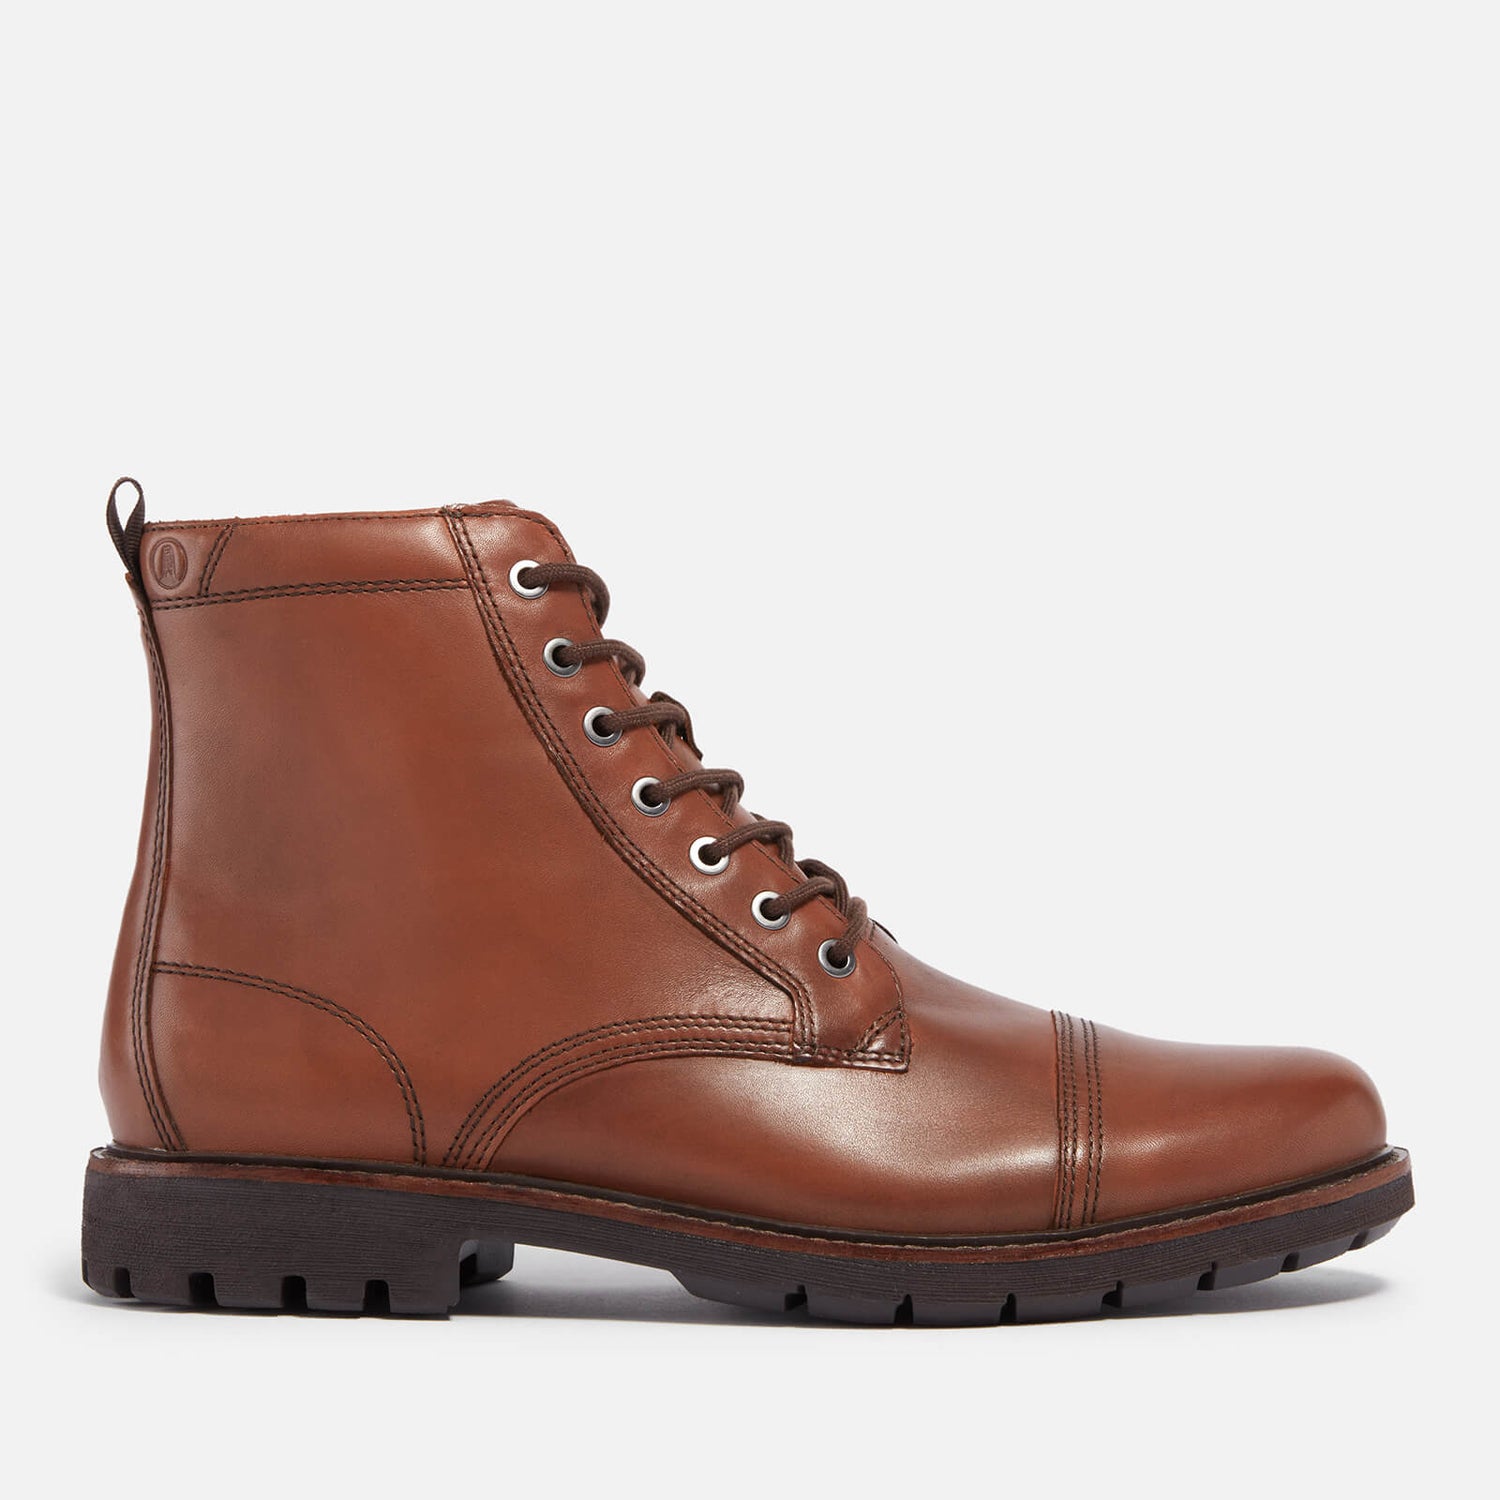 Clarks Men's Batcombe Cap Leather Boots - UK 7